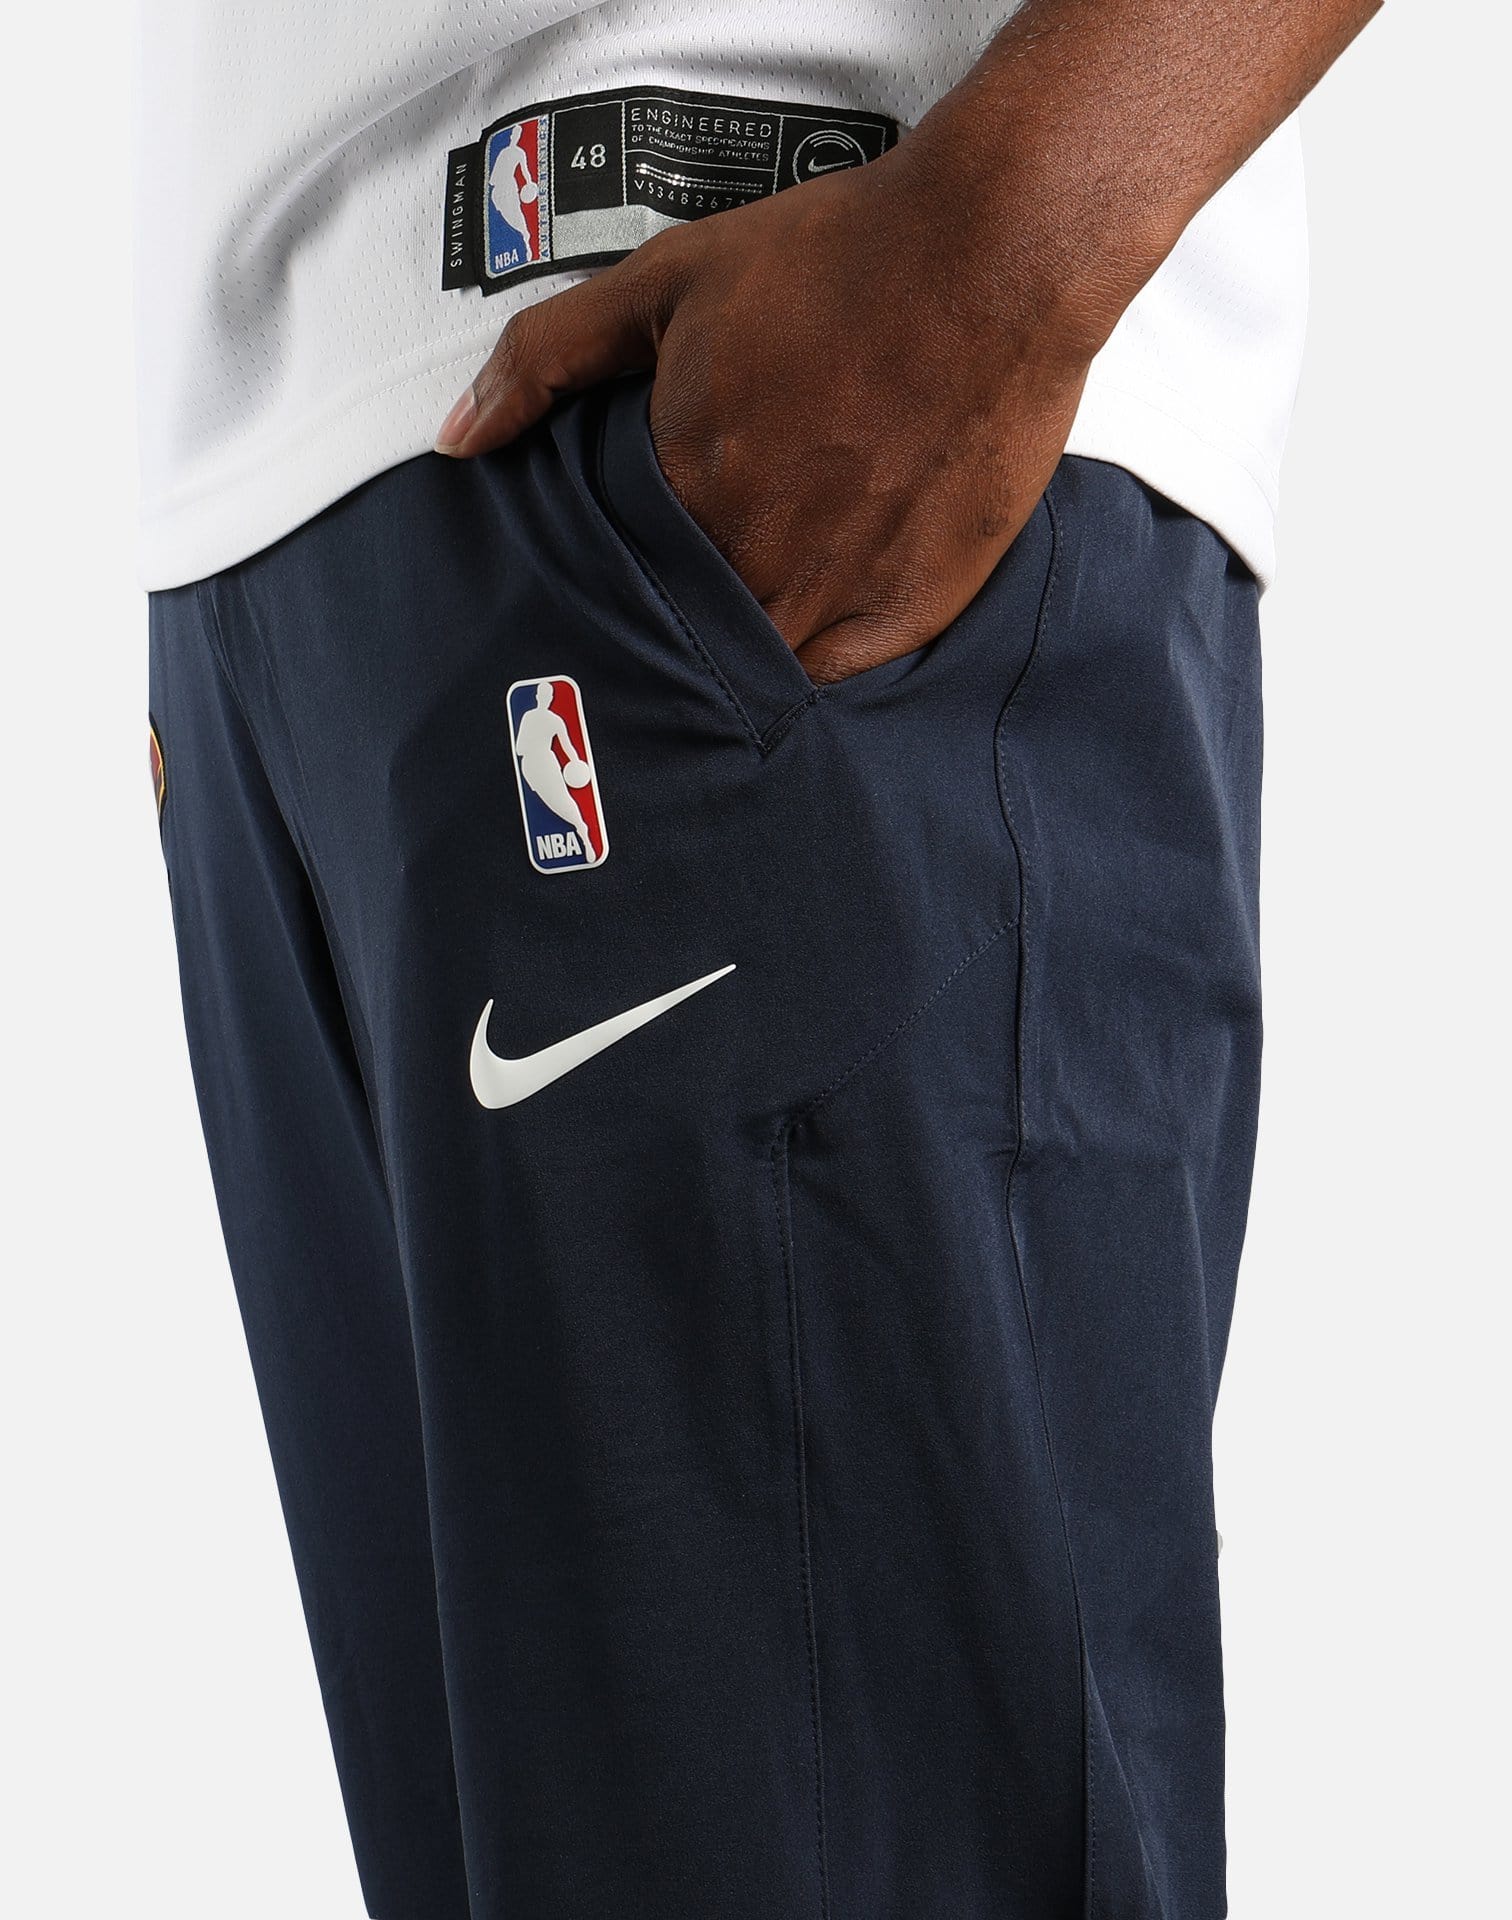 Cleveland Cavaliers NBA Sideline Apparel Grey Mens Sweatpants Size Medium